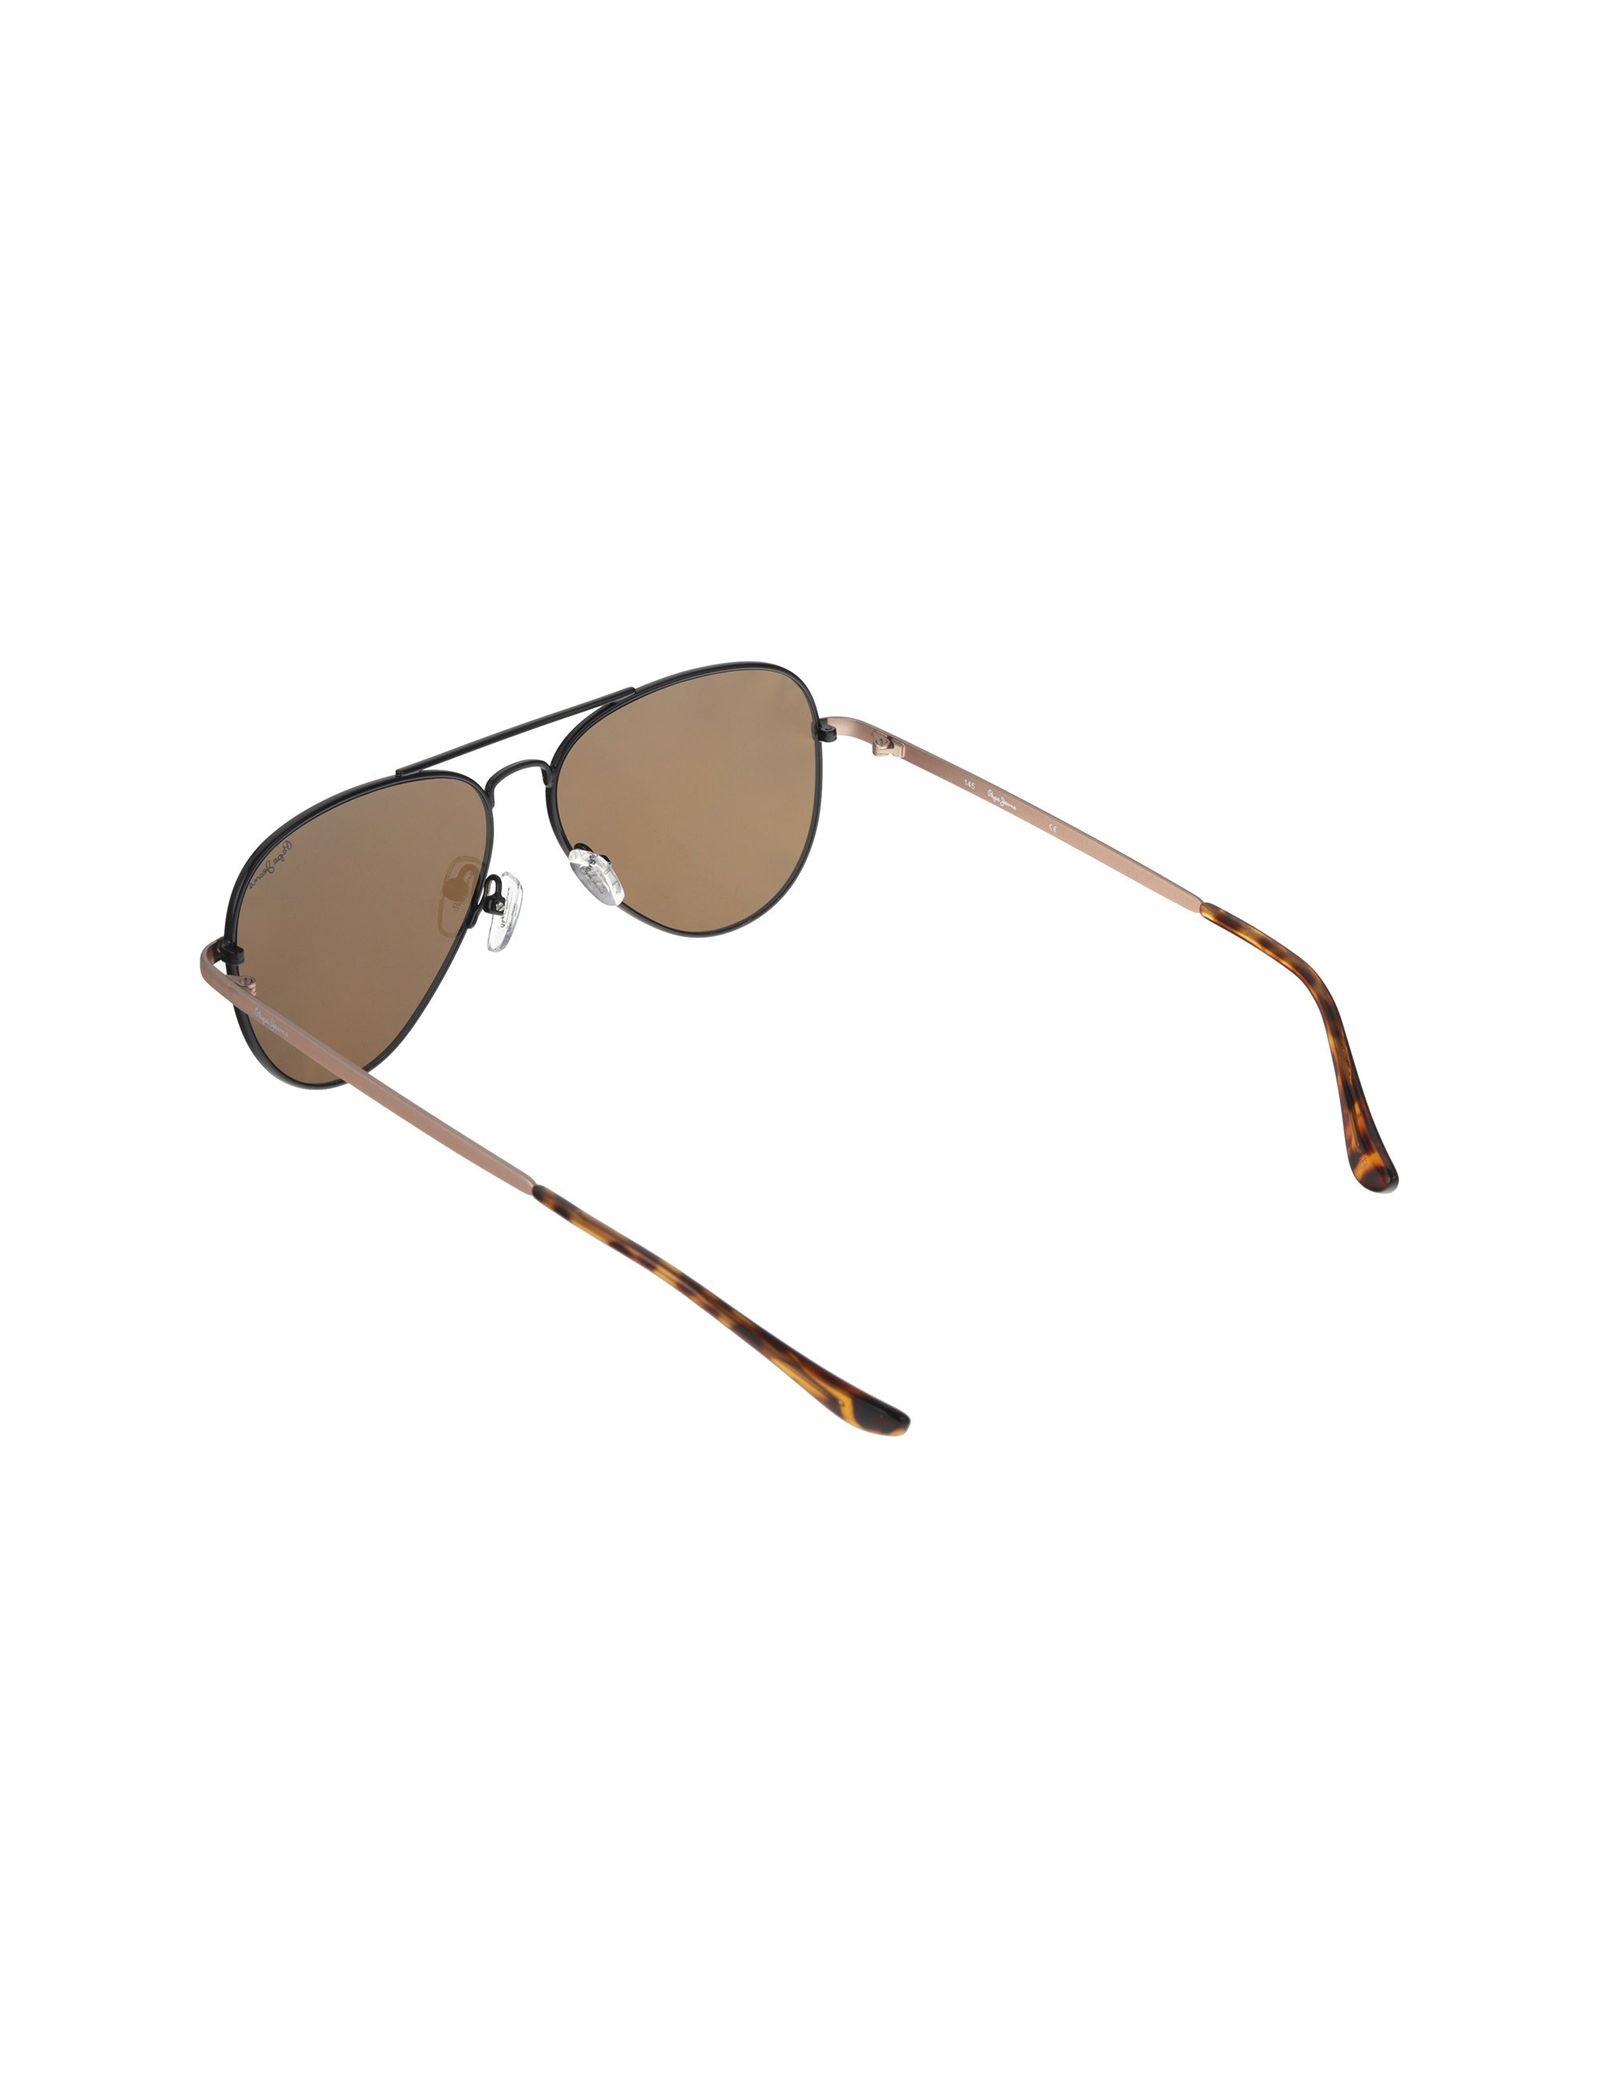 عینک آفتابی خلبانی زنانه - پپه جینز - مشکي و طلايي - 5